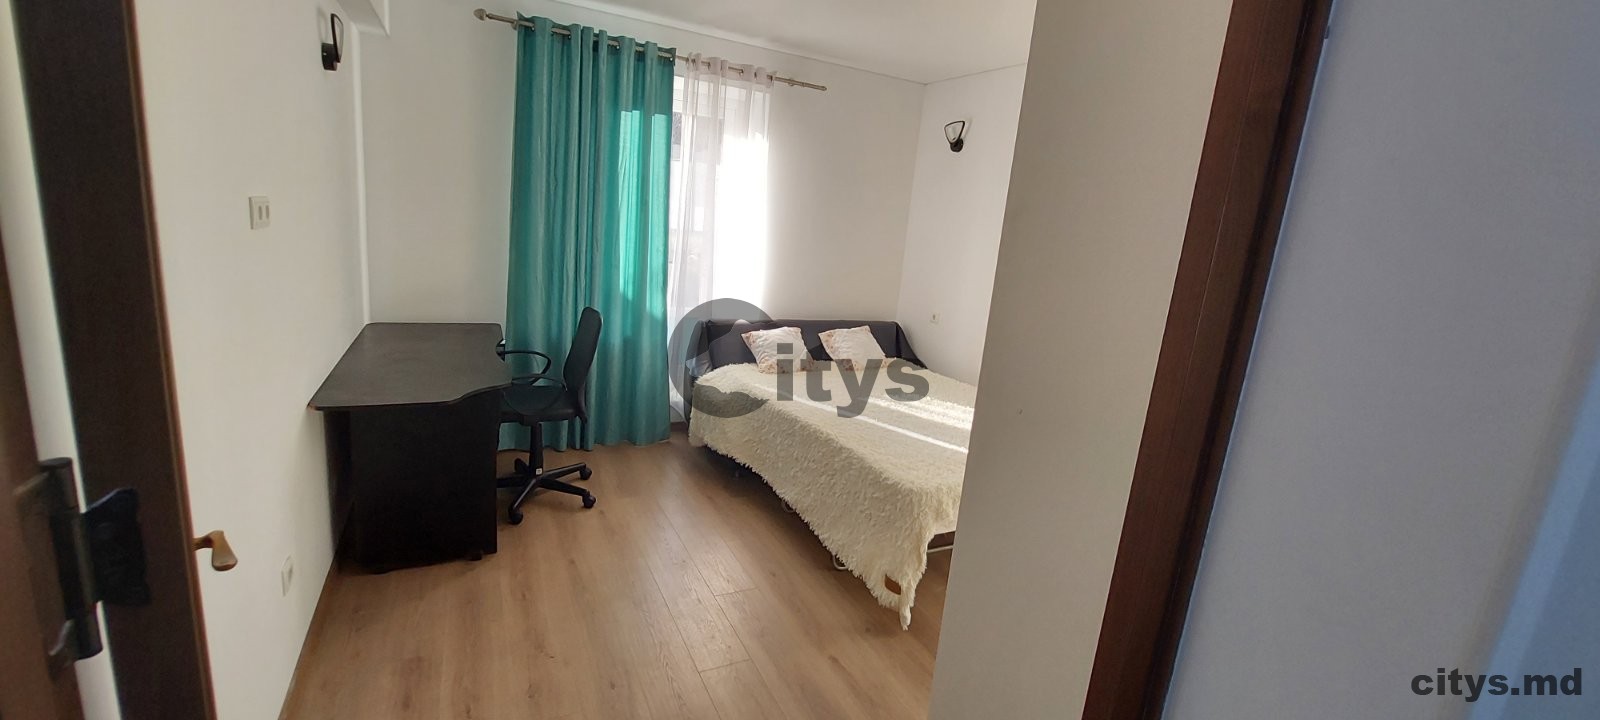 Apartament cu 2 camere, 46m², Chisinau, Posta Veche, str. Magda Isanos photo 0